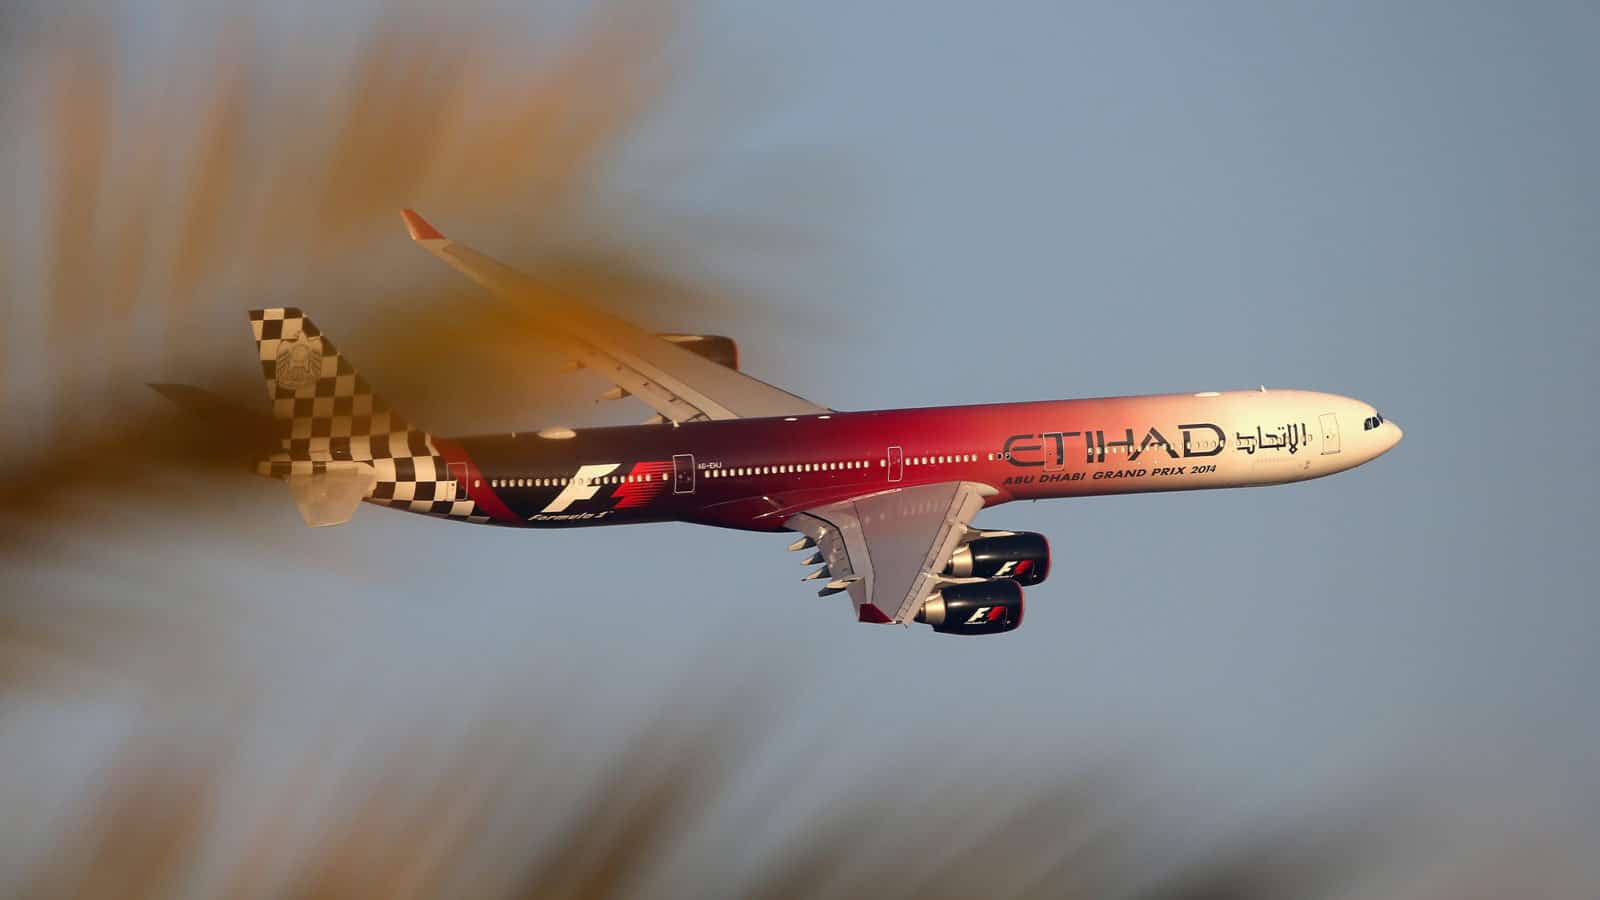 Etihad F1 branded plane in the sky